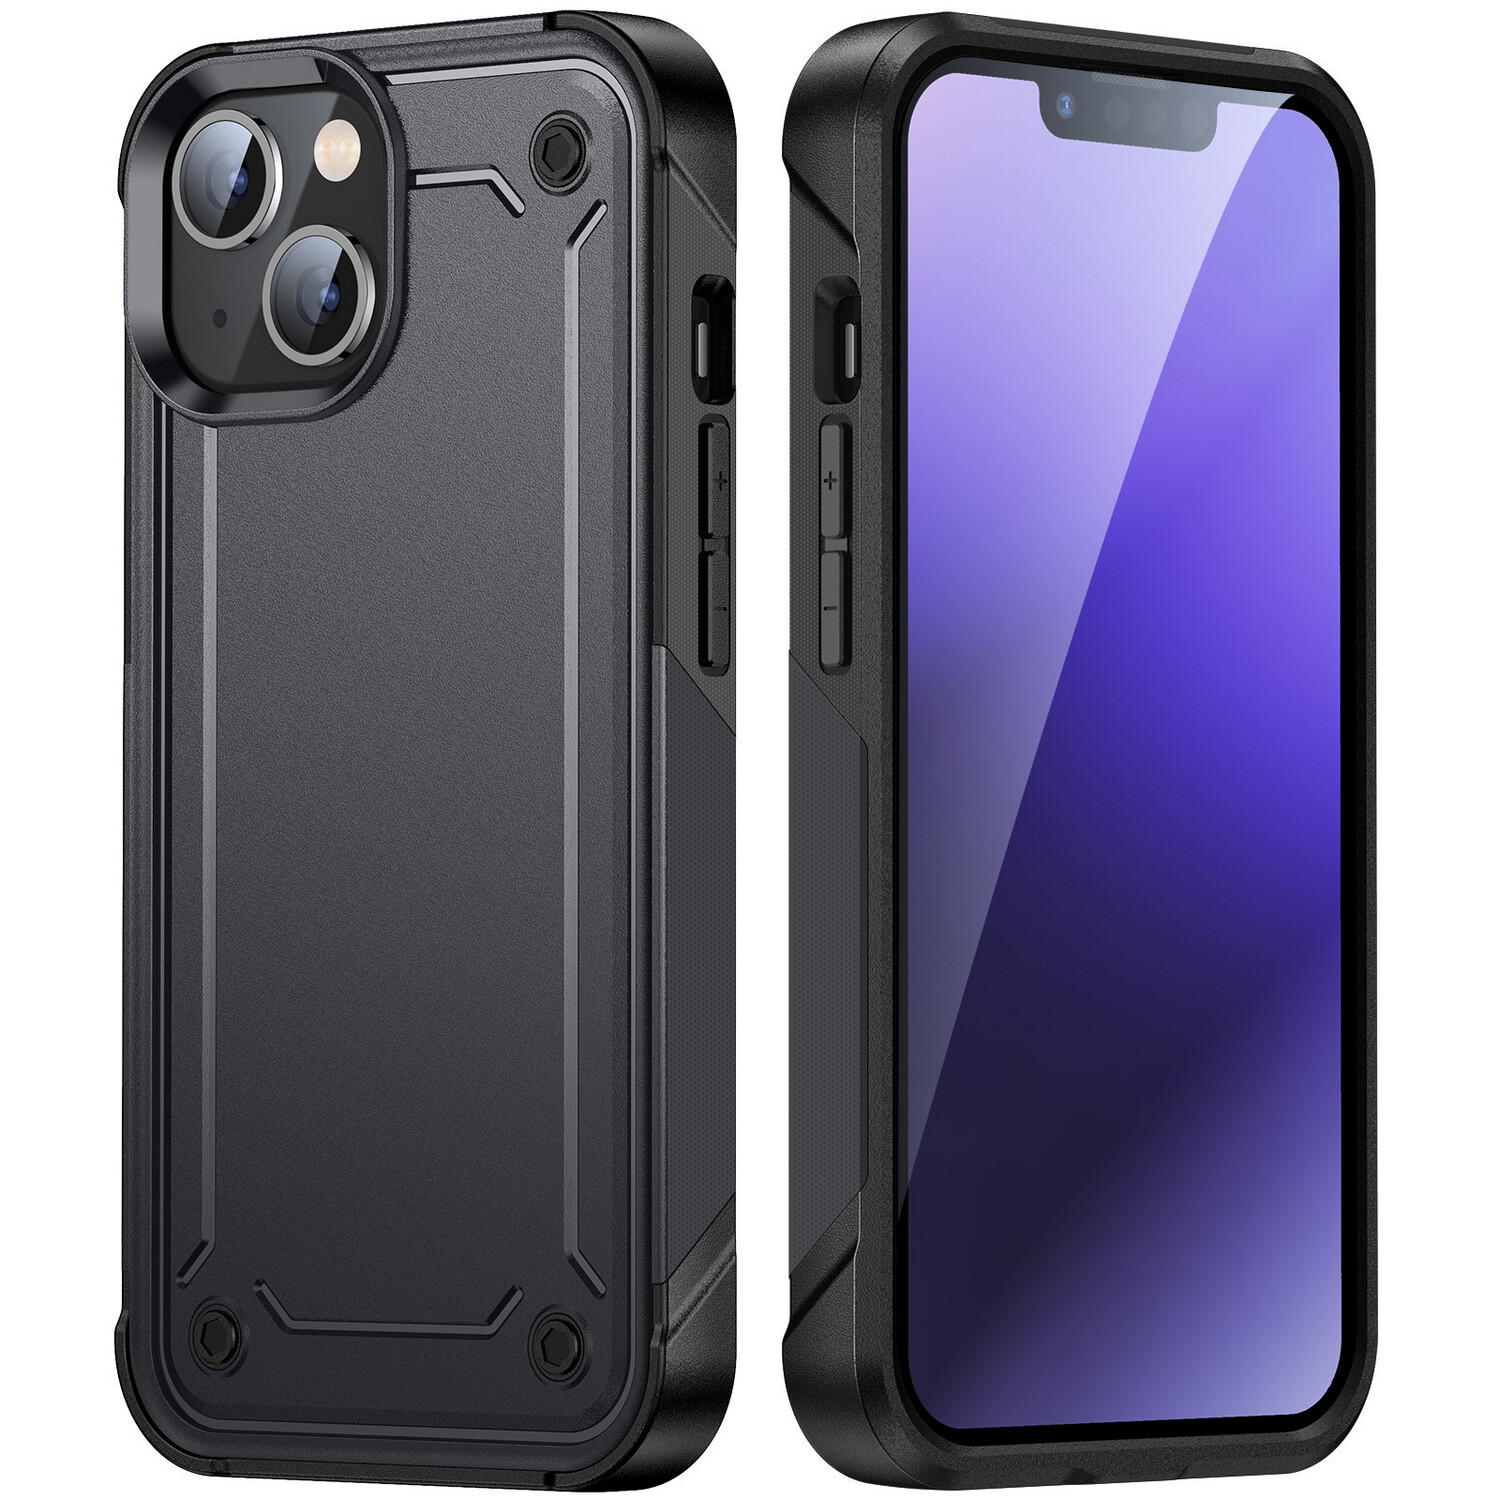 iPhone 11 Pro Max 6.5 2-piece Protective Back Case, Color: Black